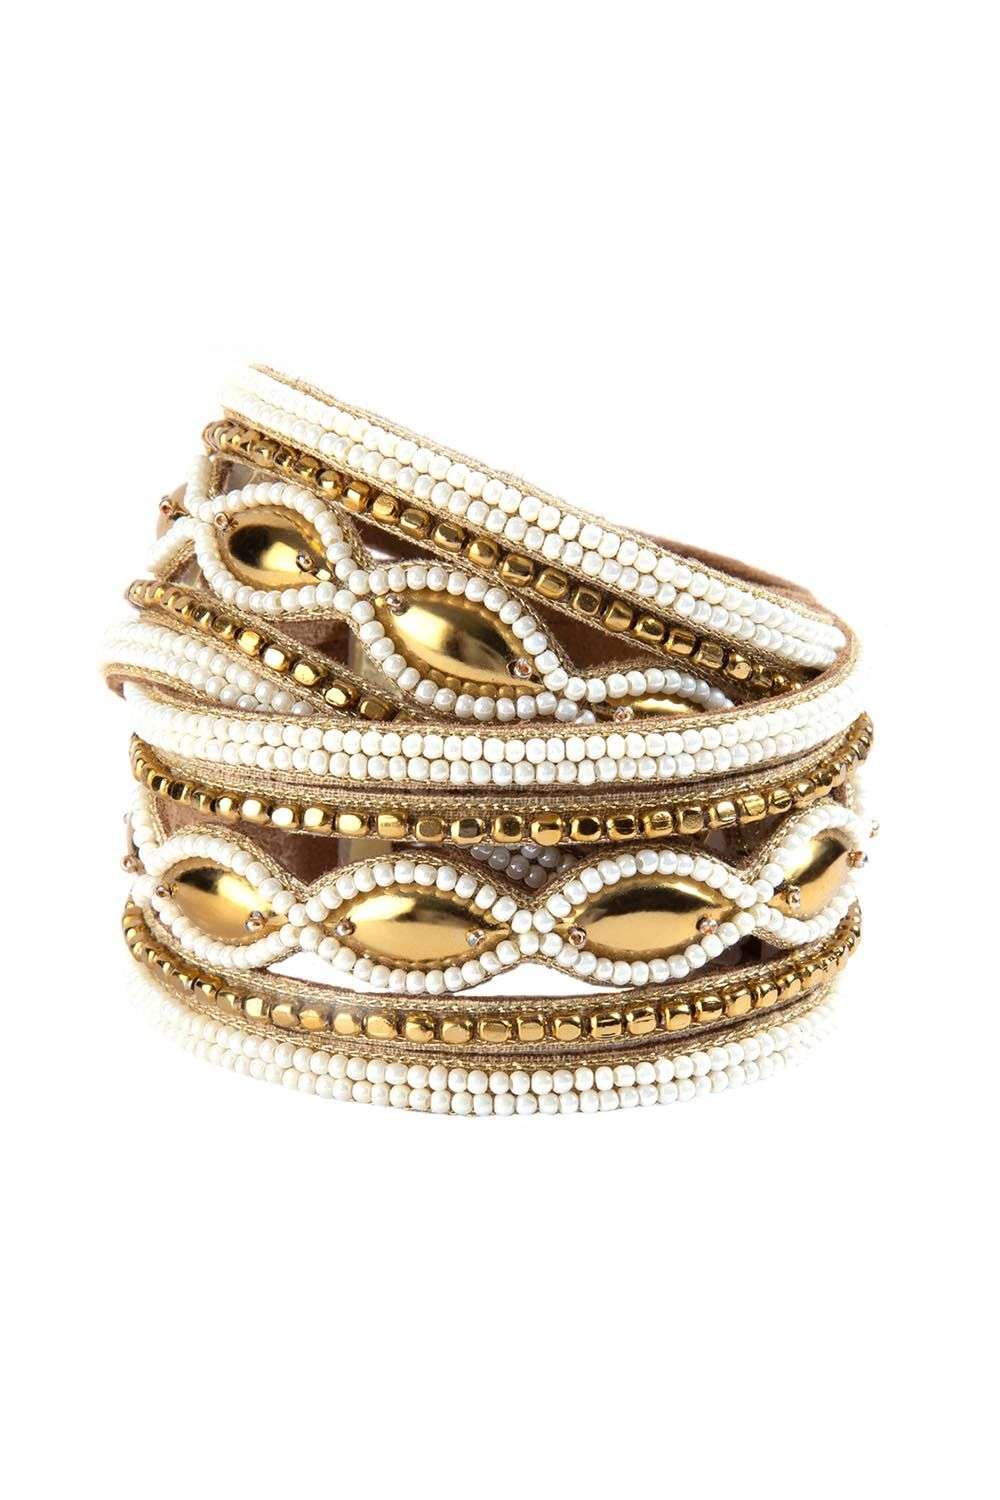 Glass Beads Bracelets – Madeinindia Beads